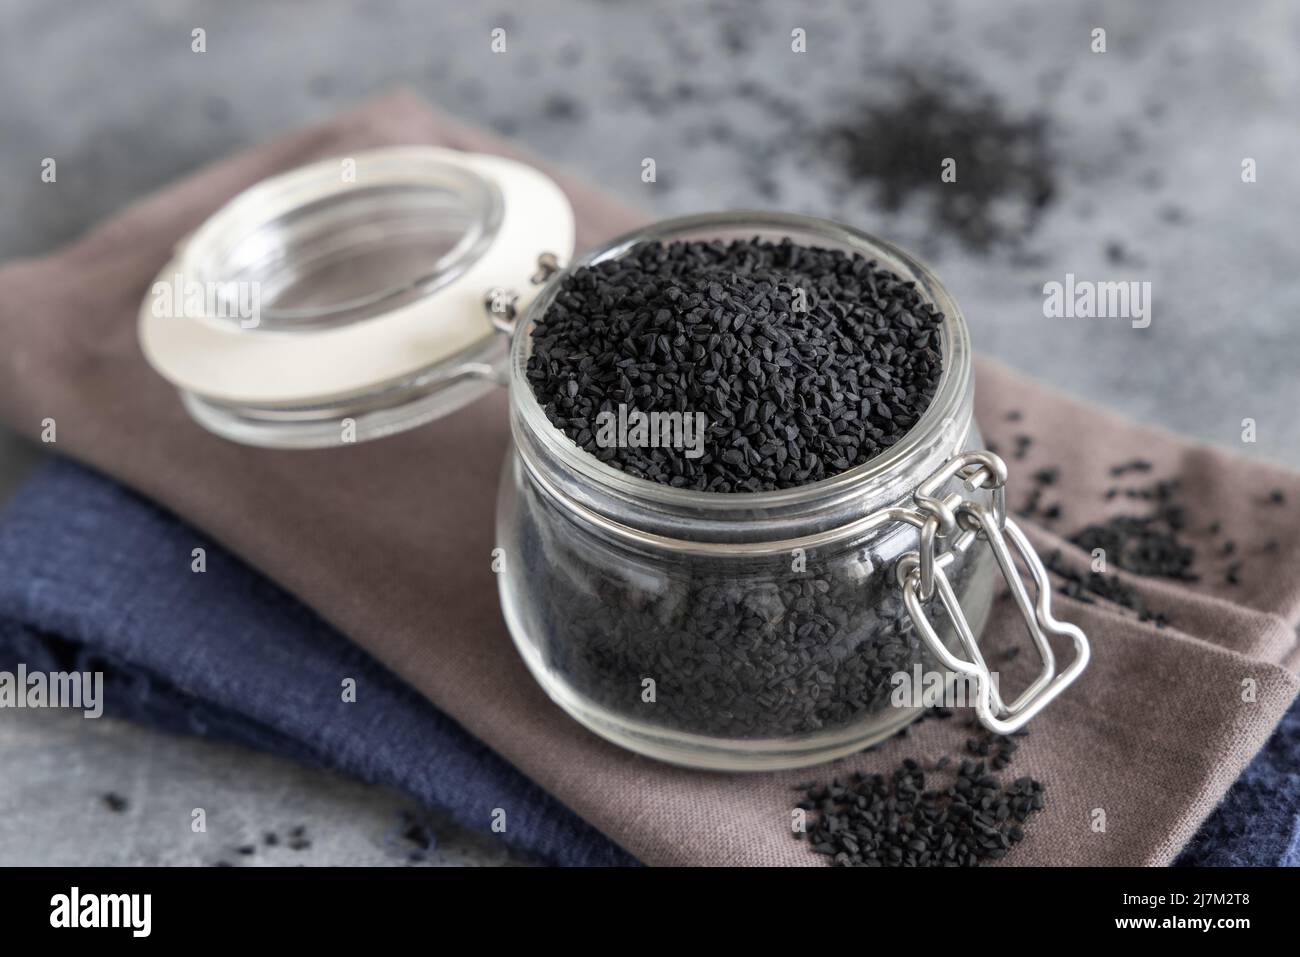 Indian spice Black cumin (nigella sativa or kalonji) seeds glass jar on grey table close up with  copy space Stock Photo